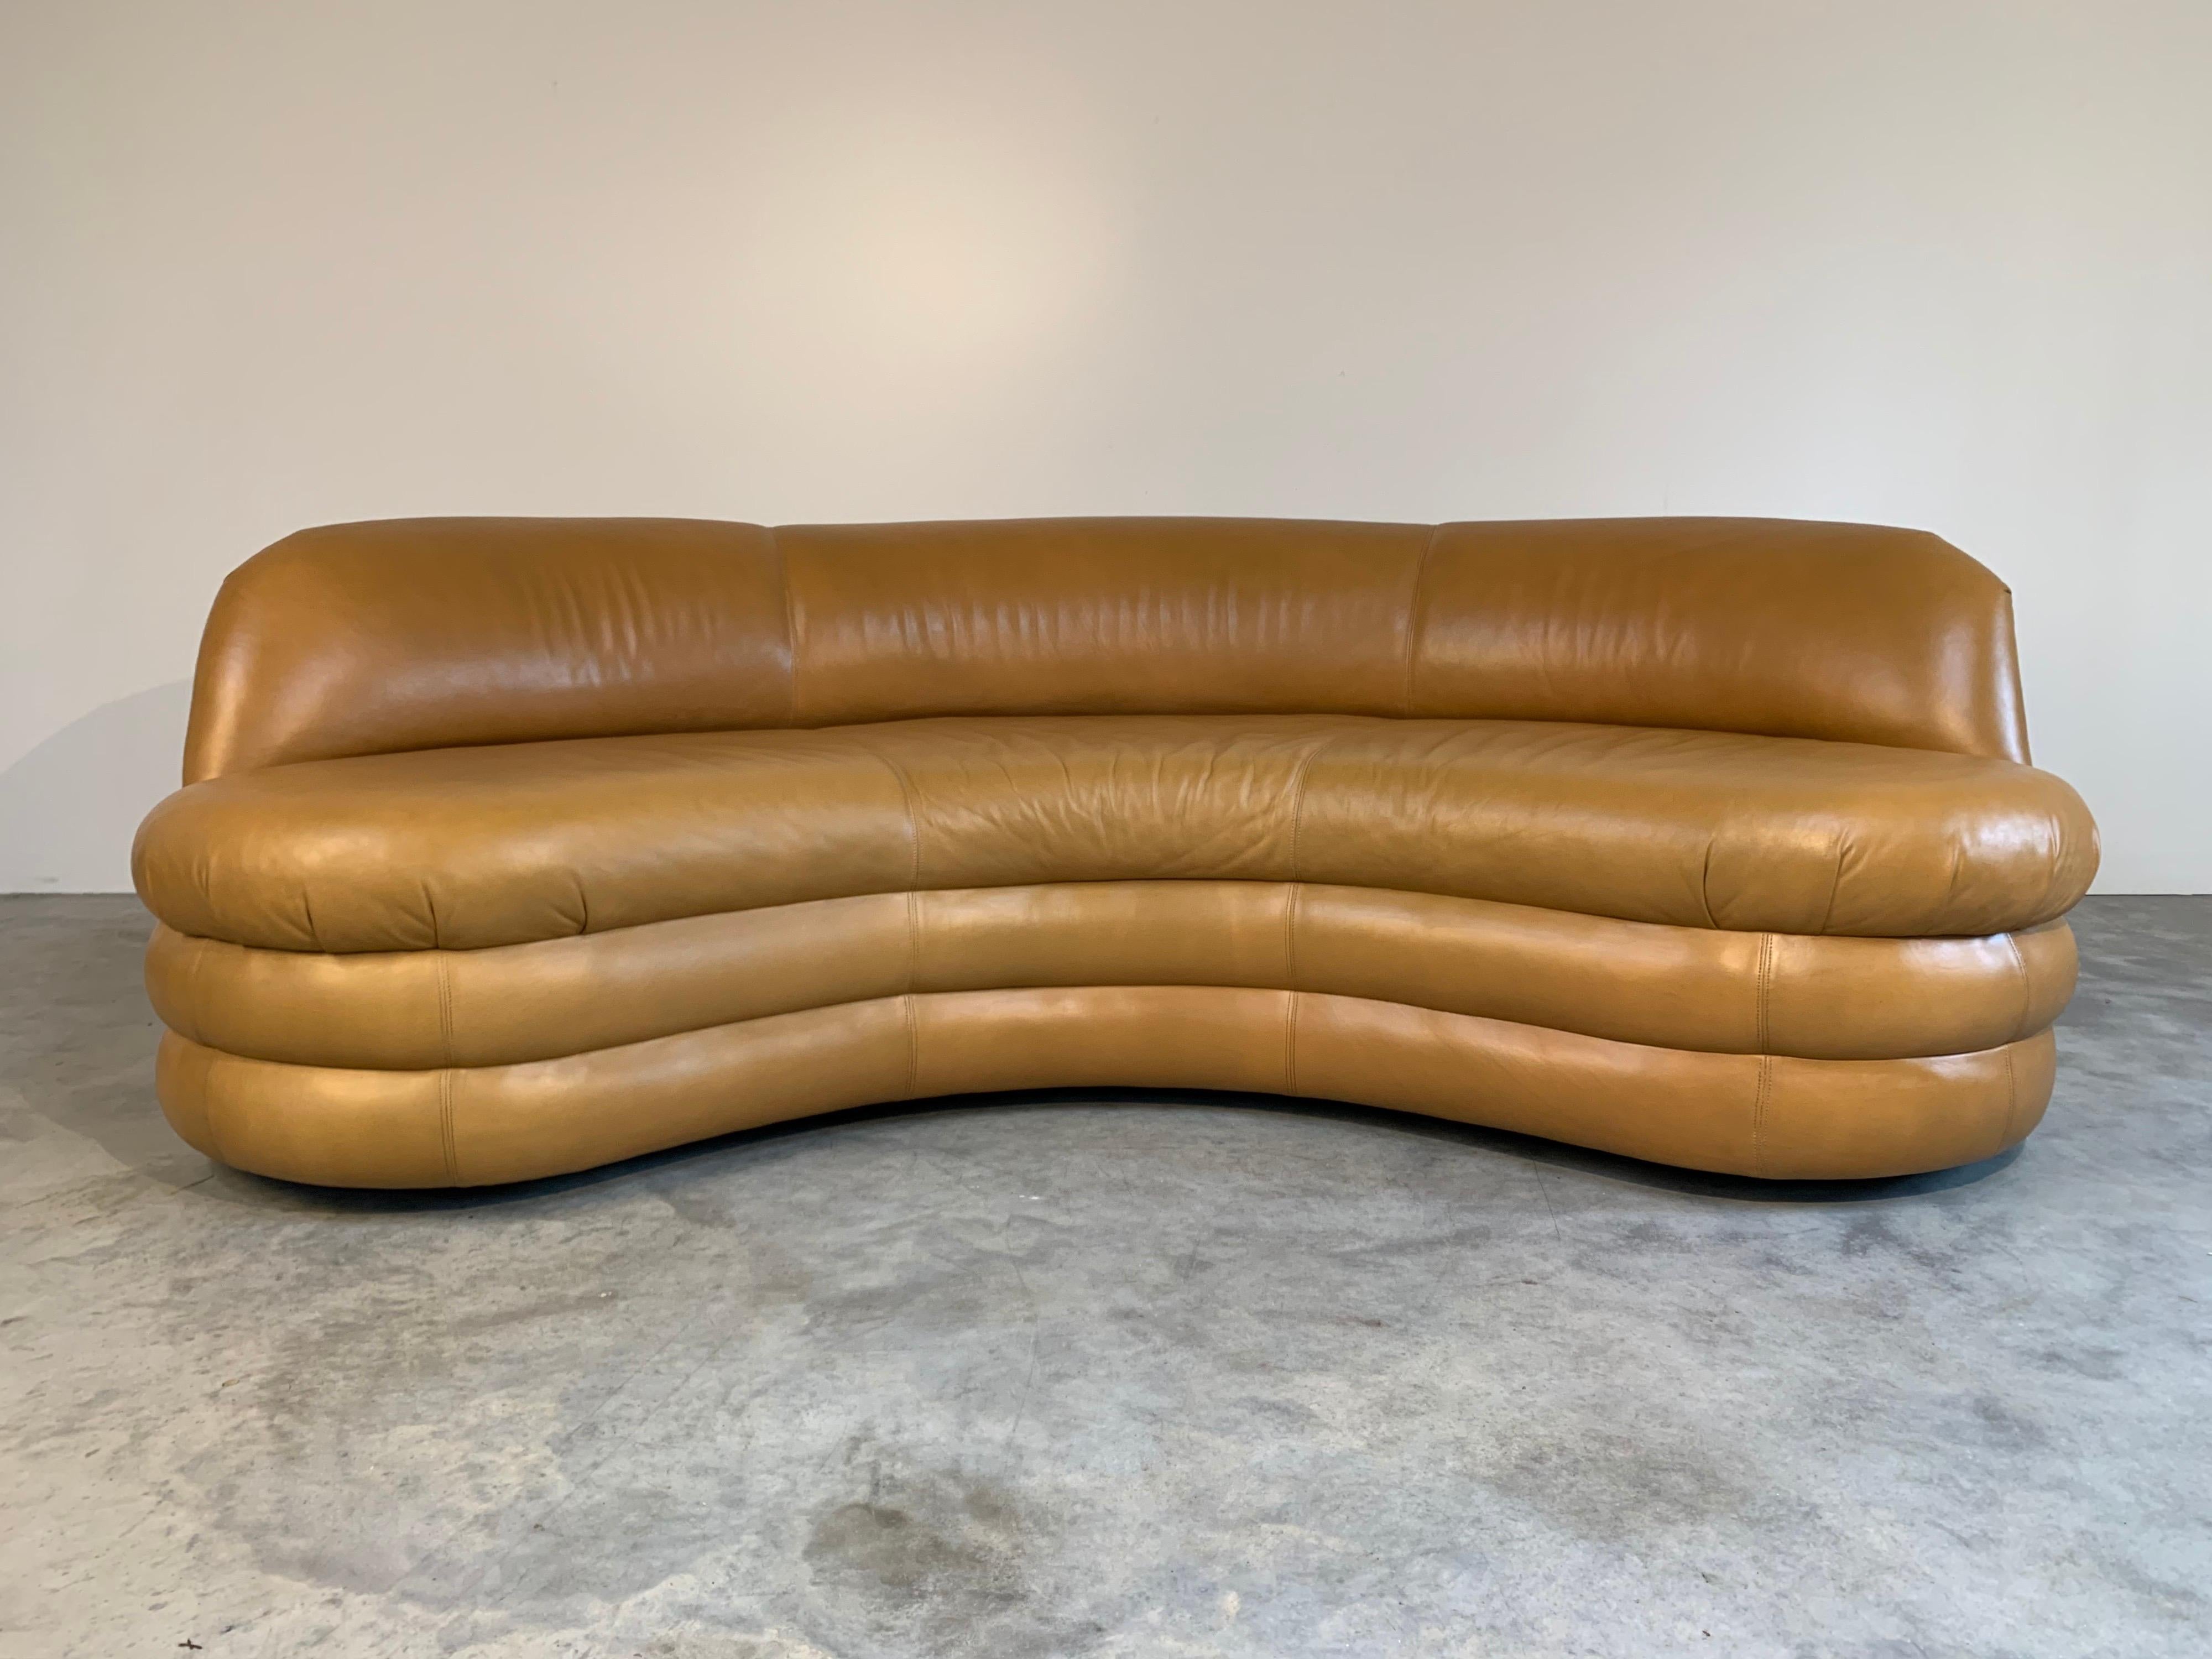 Hollywood Regency Vladimir Kagan Sofa for Directional Biomorphic Kidney Form in Caramel Leather